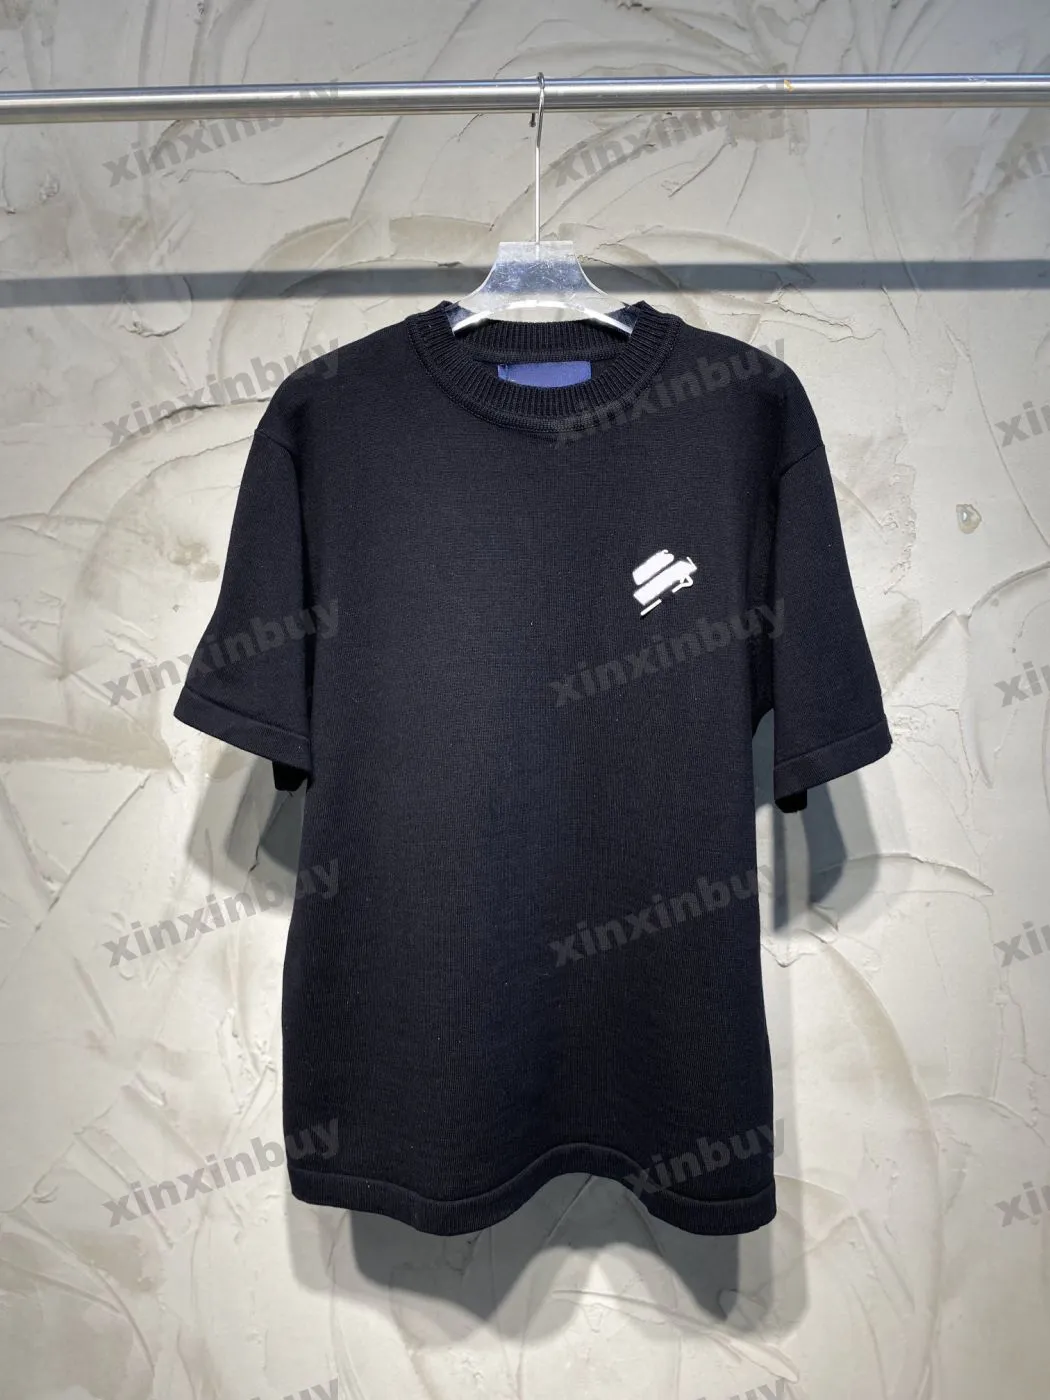 Xinxinbuy Men designer tee t shirt 23SS Paris Pin Letter Brodery Sticked Short Sleeve Cotton Women Black White XS-2XL